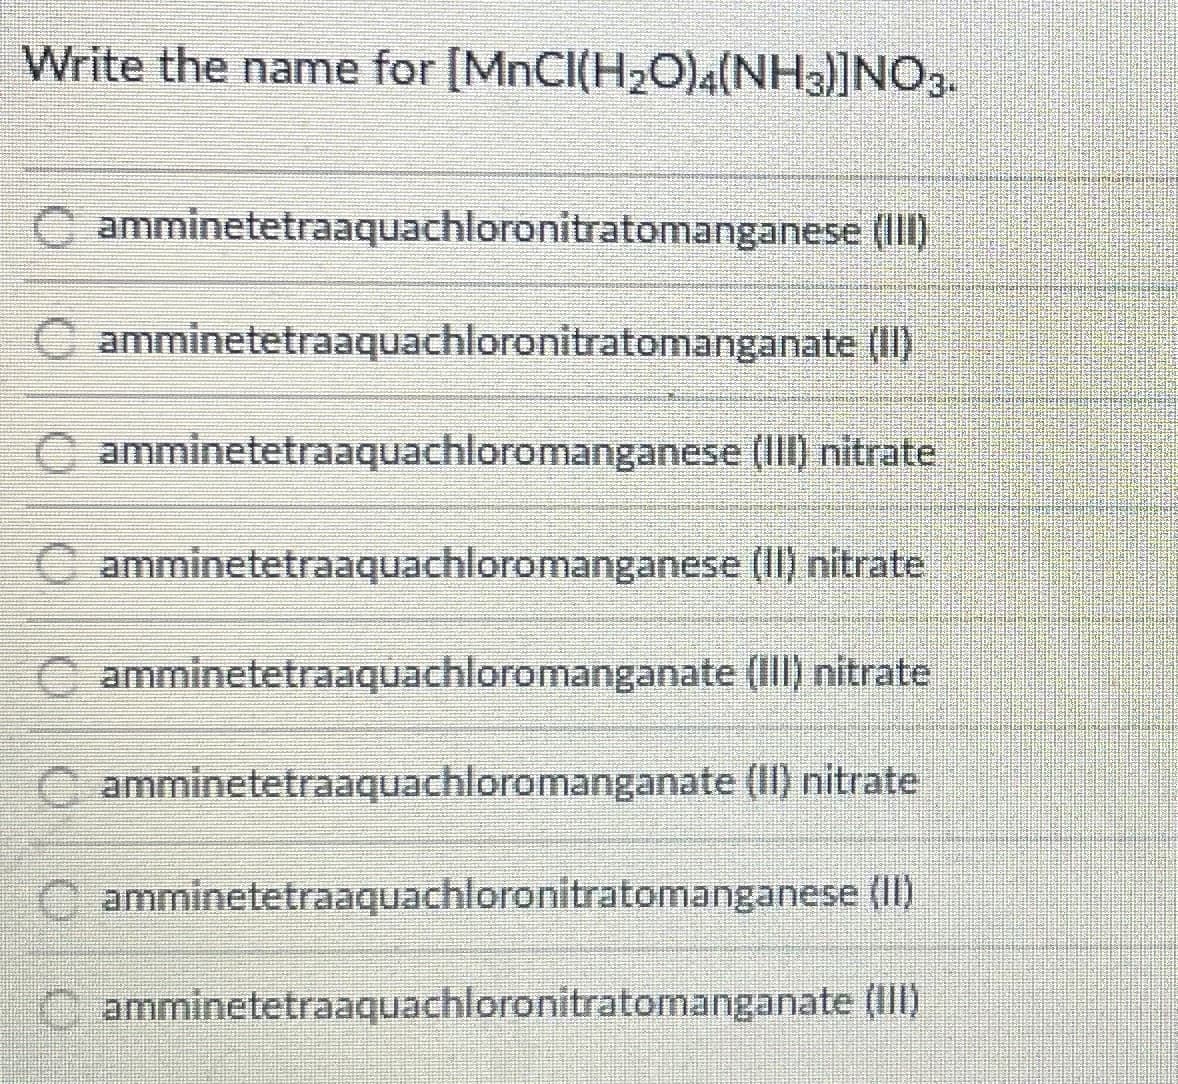 Write the name for [MNCI(H20)(NH3)]NO3.
C amminetetraaquachloronitratomanganese (I11)
C amminetetraaquachloronitratomanganate (1)
Oamminetetraaquachloromanganese (Ill) nitrate
amminetetraaquachloromanganese (II) nitrate
C amminetetraaquachloromanganate (III) nitrate
amminetetraaquachloromanganate (II) nitrate
C amminetetraaquachloronitratomanganese (II)
Camminetetraaquachloronitratomanganate (Ill)
